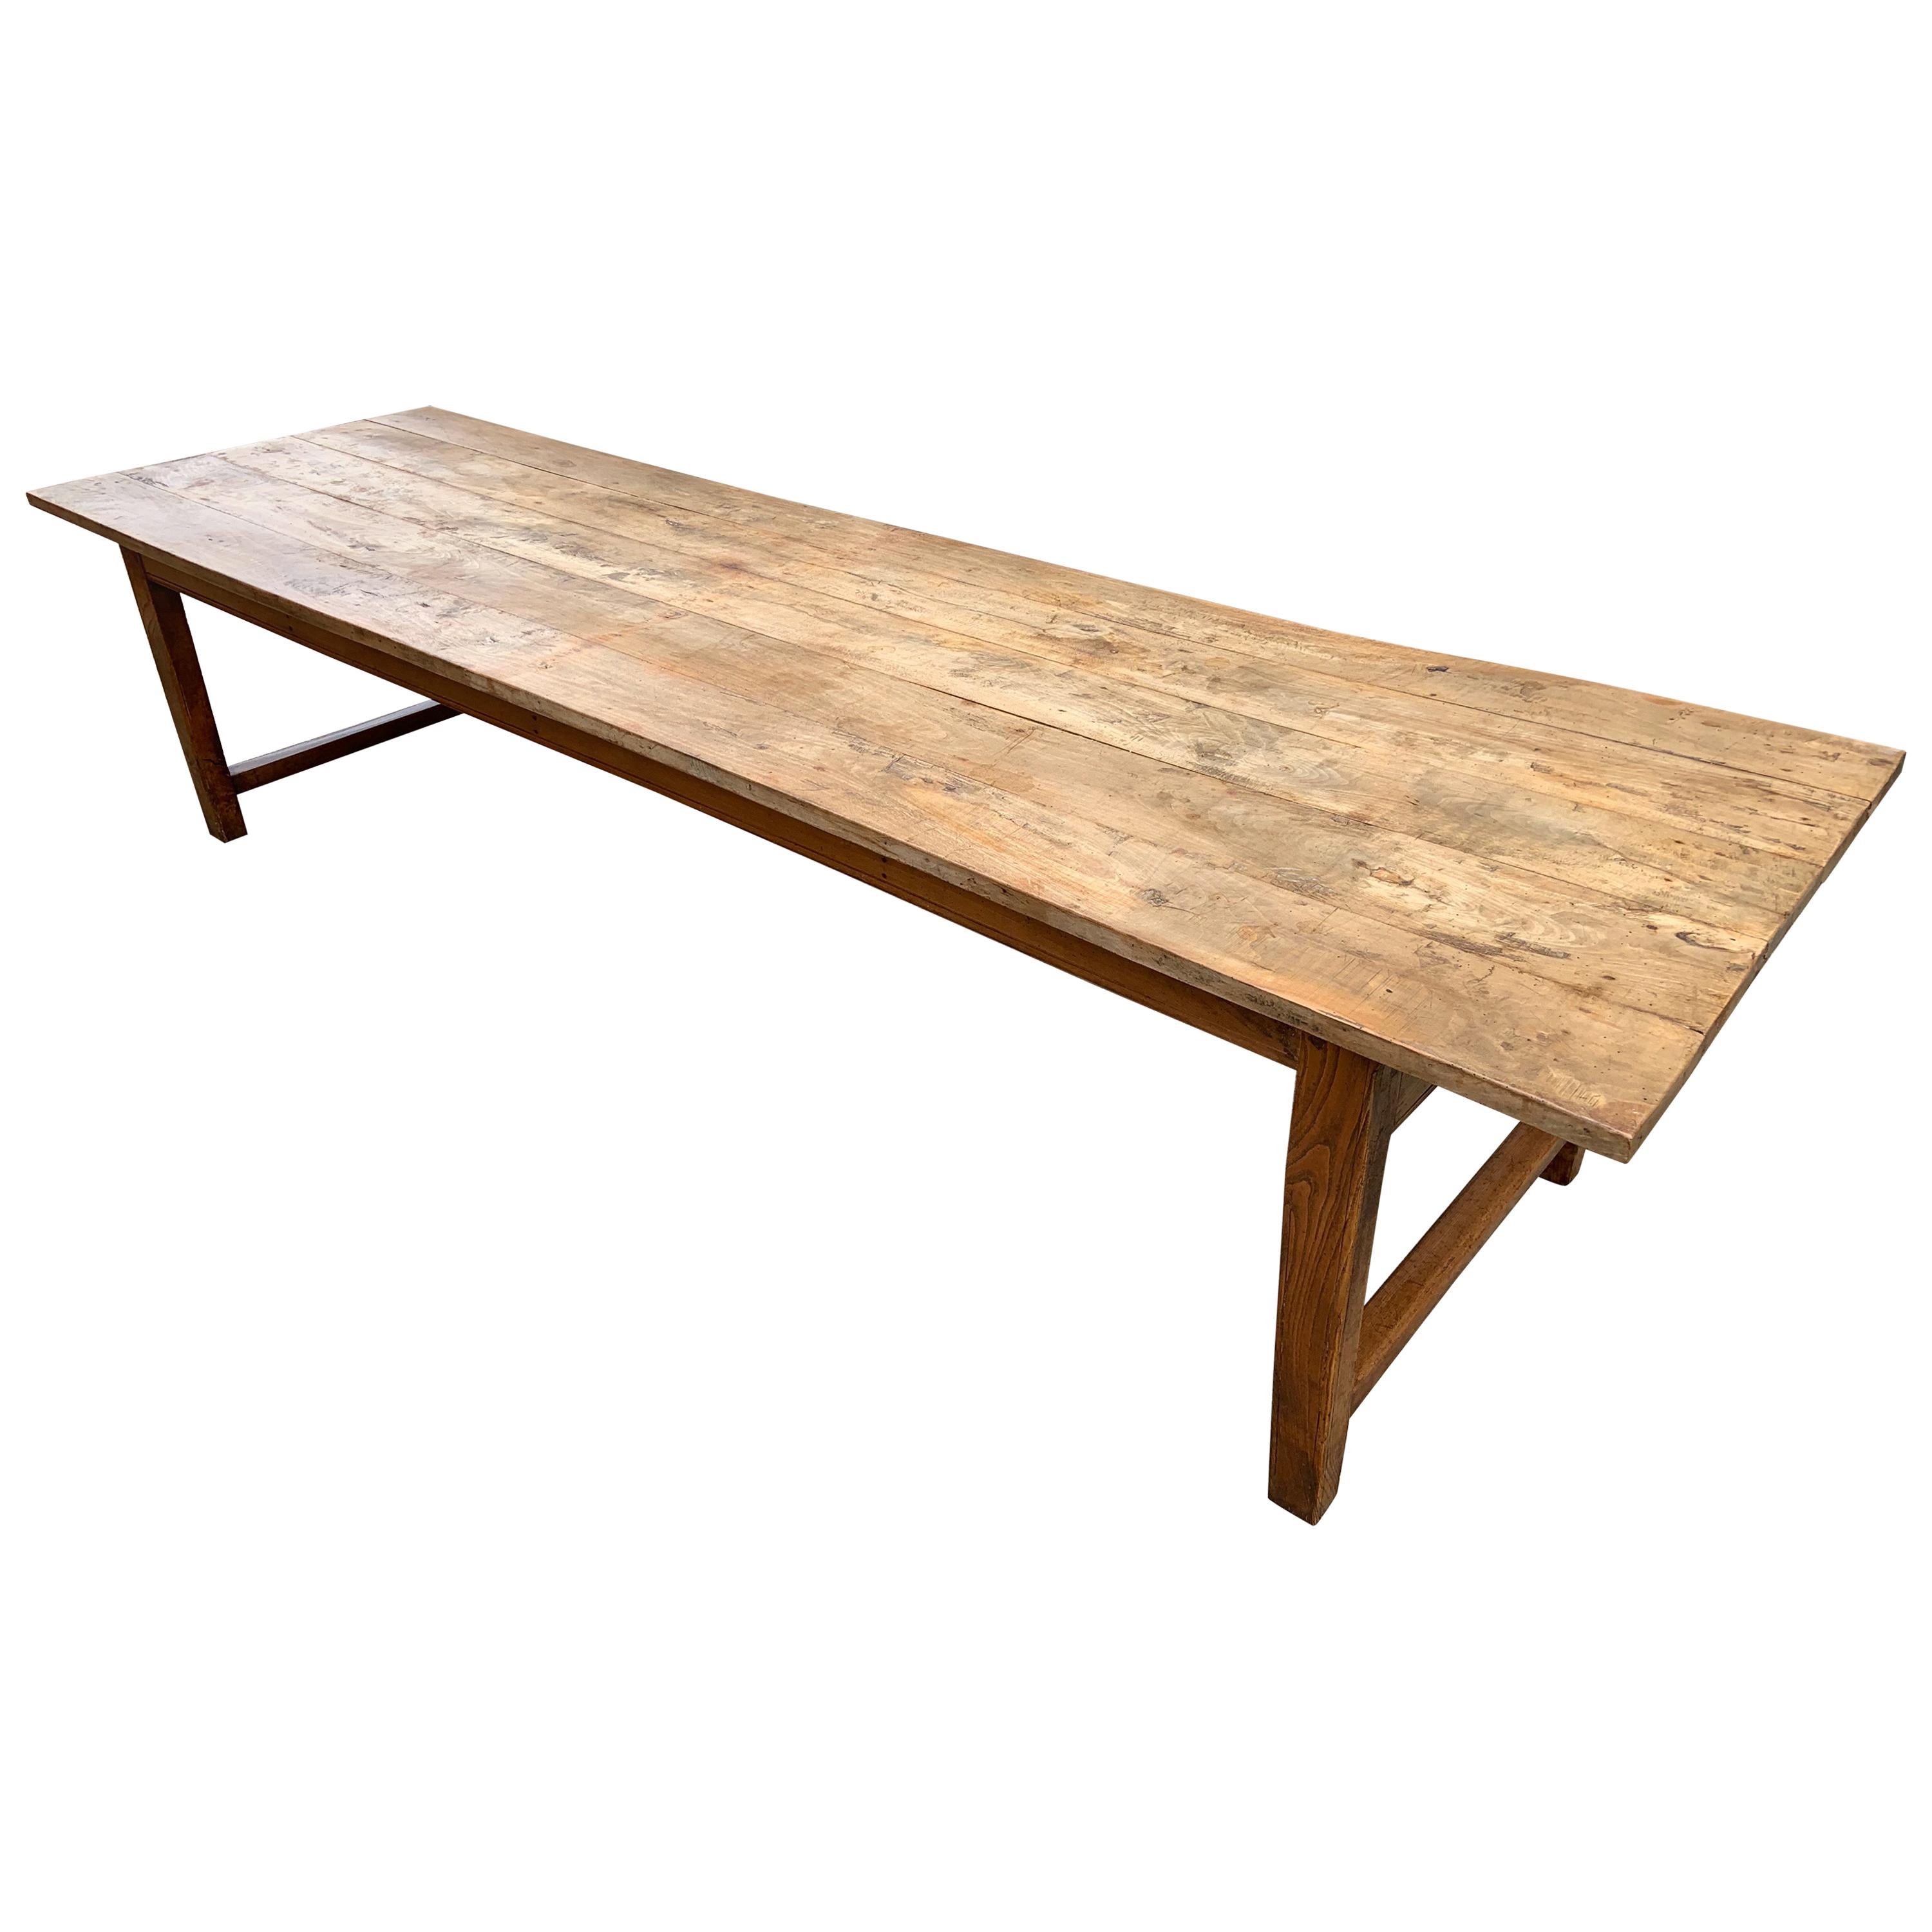 Large Rustic Pale Beech Farmhouse Table